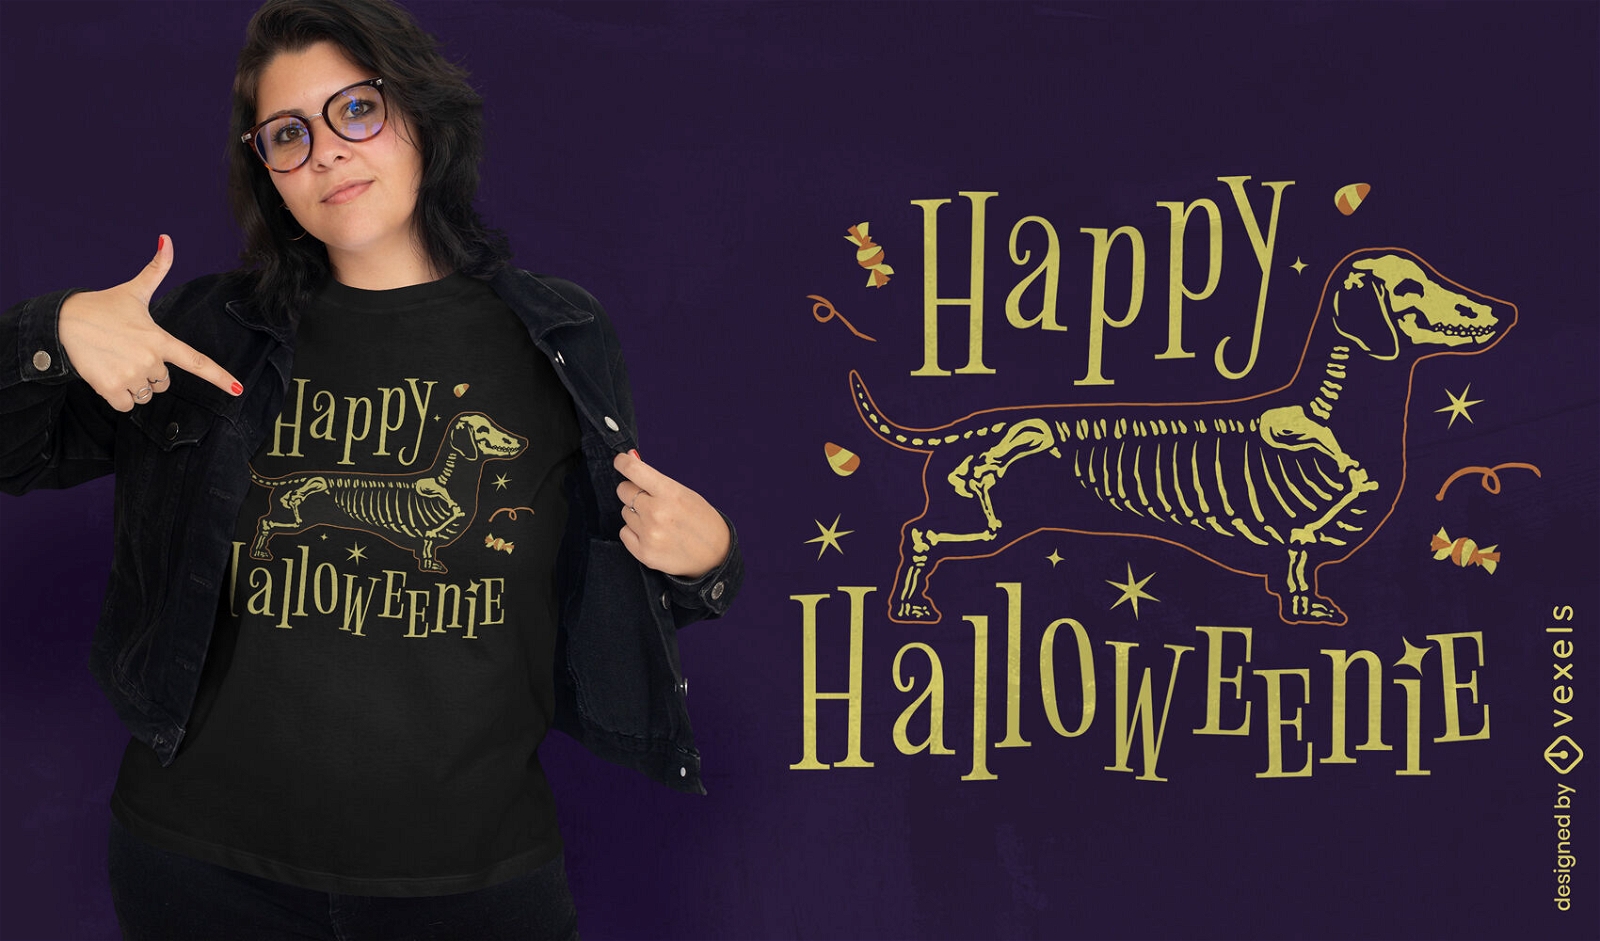 Daschund Hundeskelett Halloween T-Shirt Design